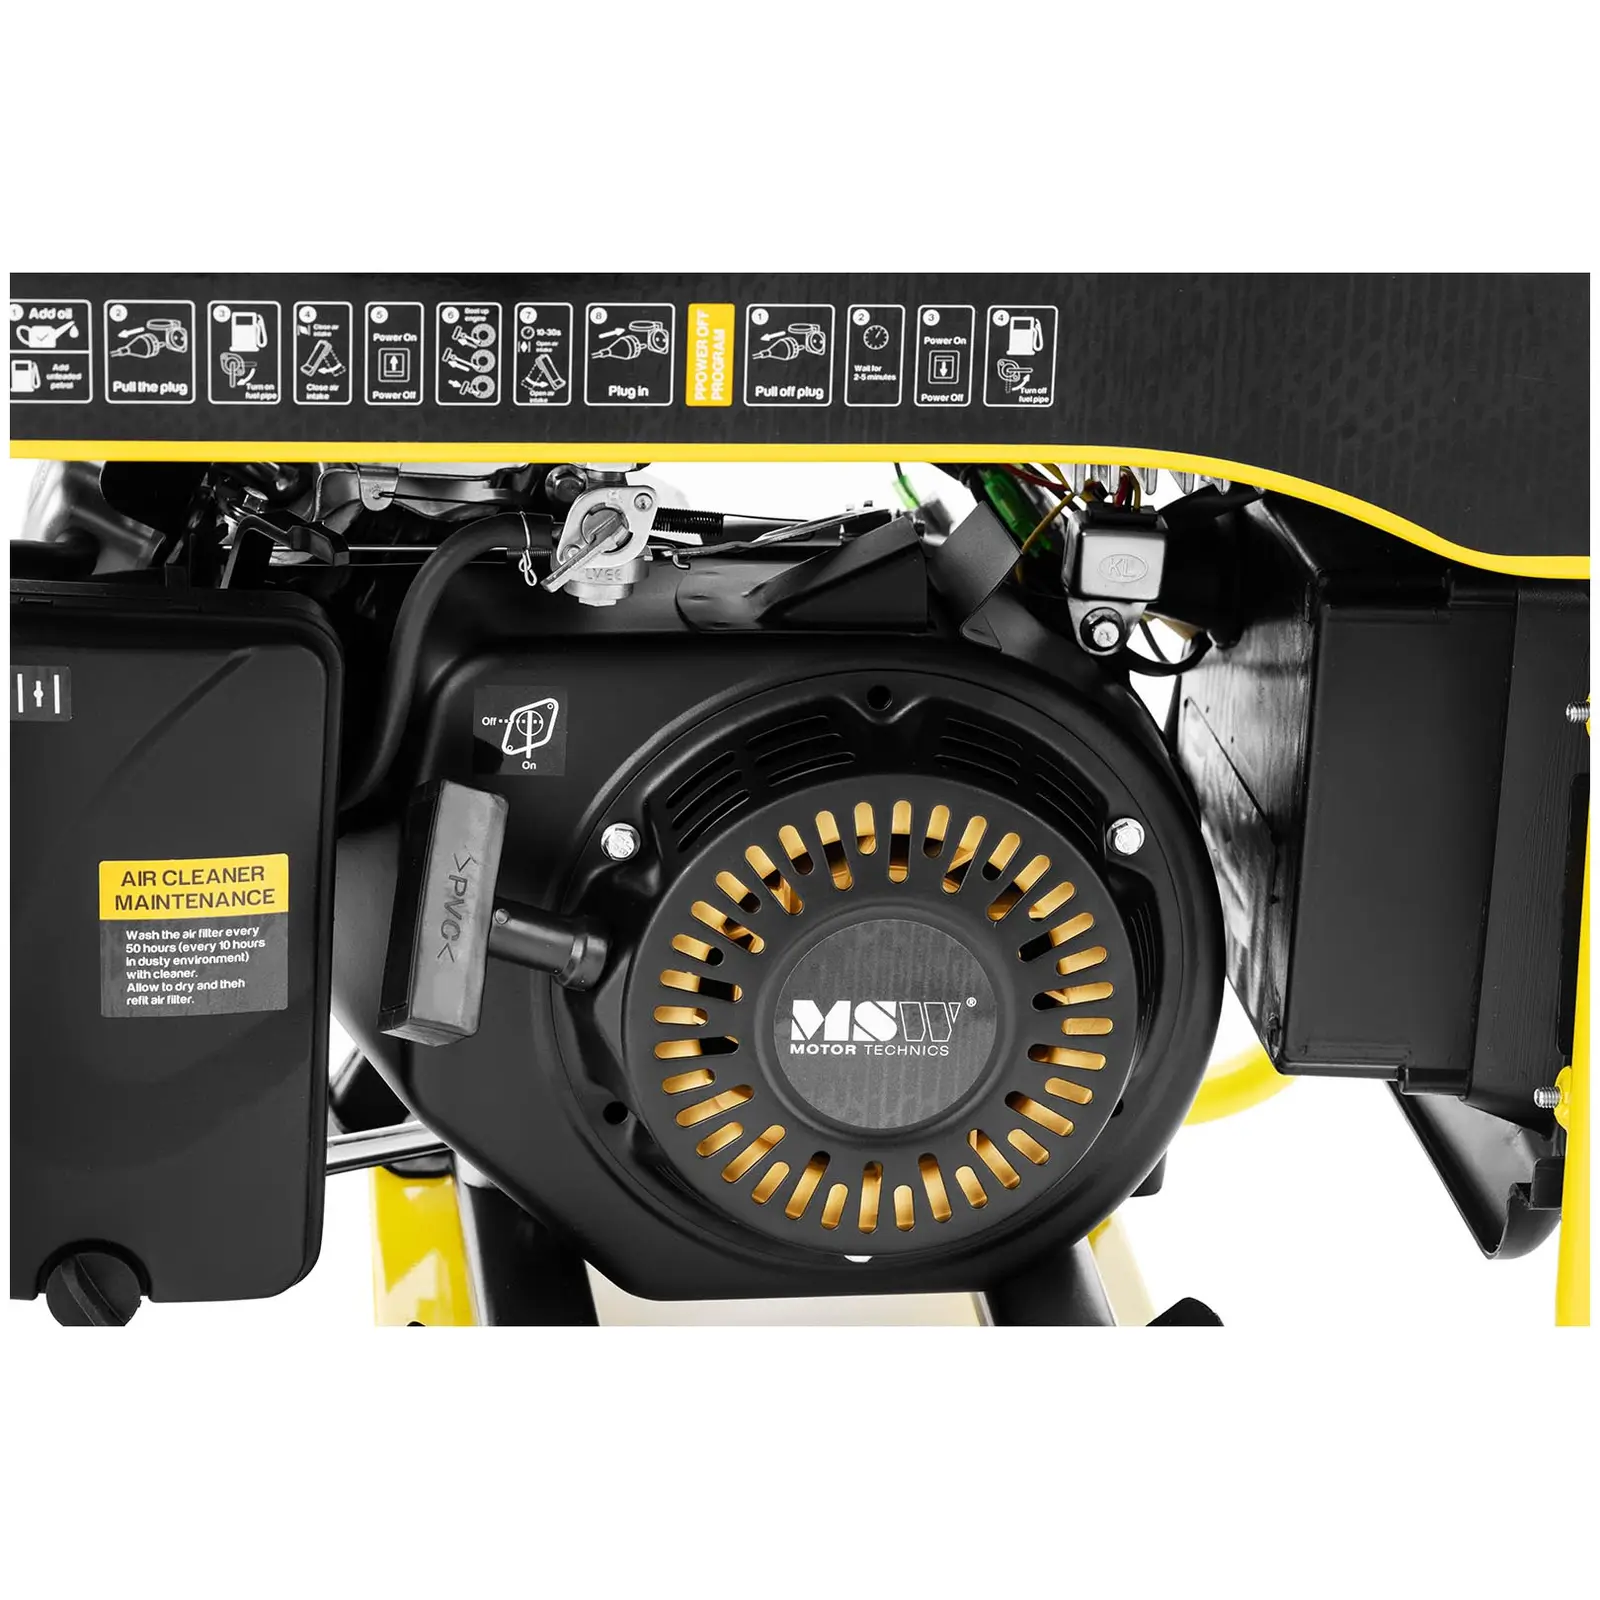 Generador eléctrico Inverter de gasolina - 3200 W - 230 V AC - arranque manual